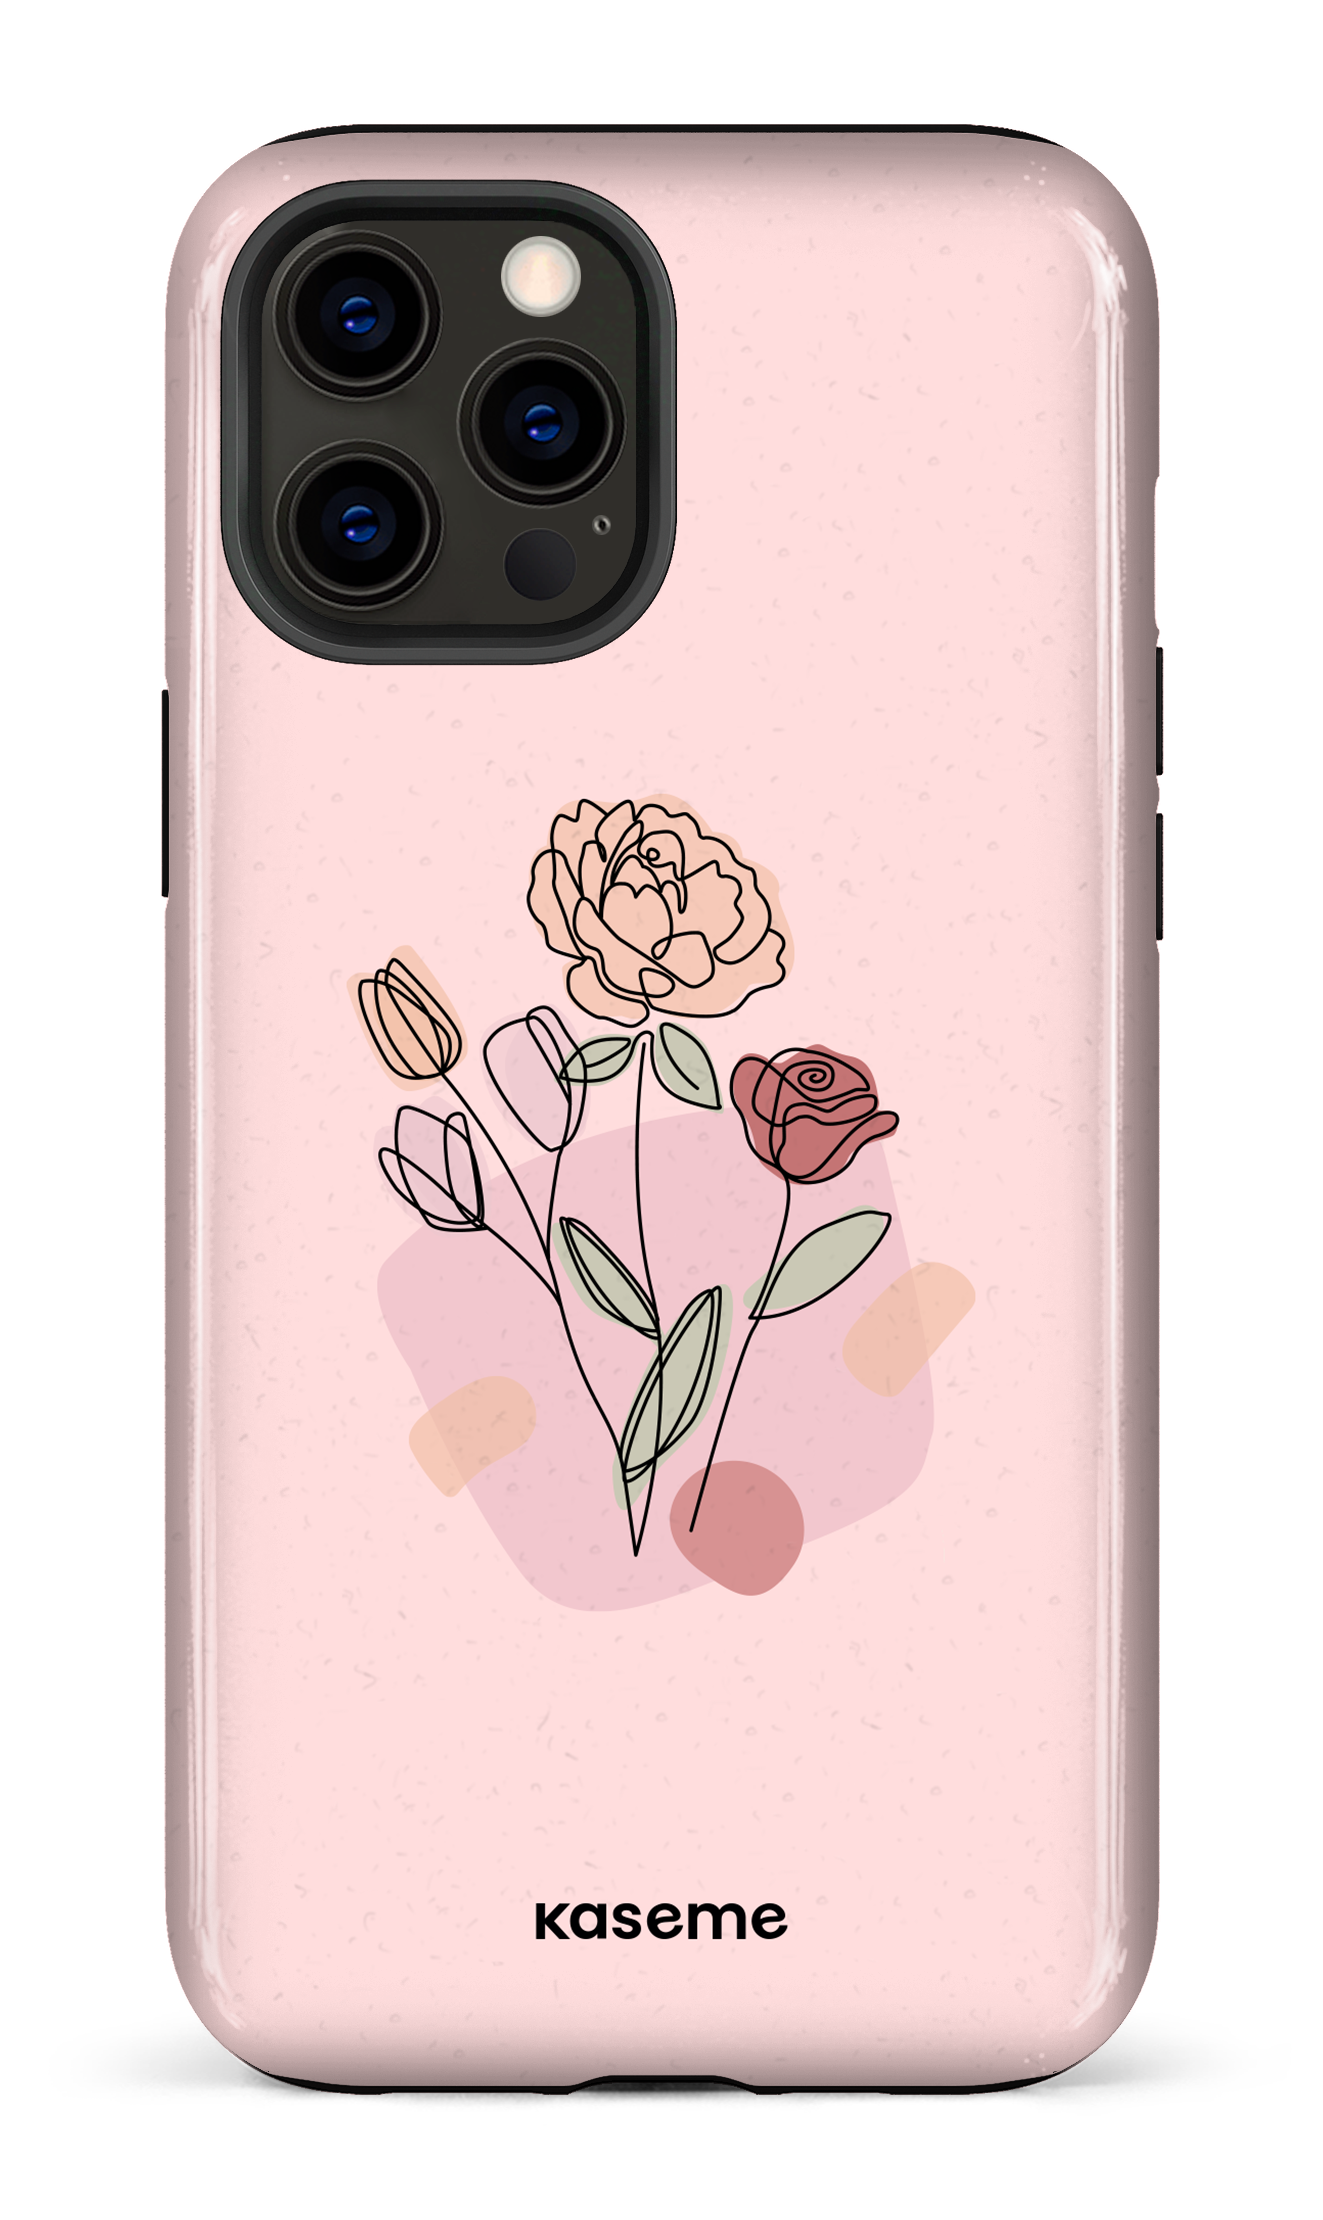 Spring memories pink - iPhone 12 Pro Max